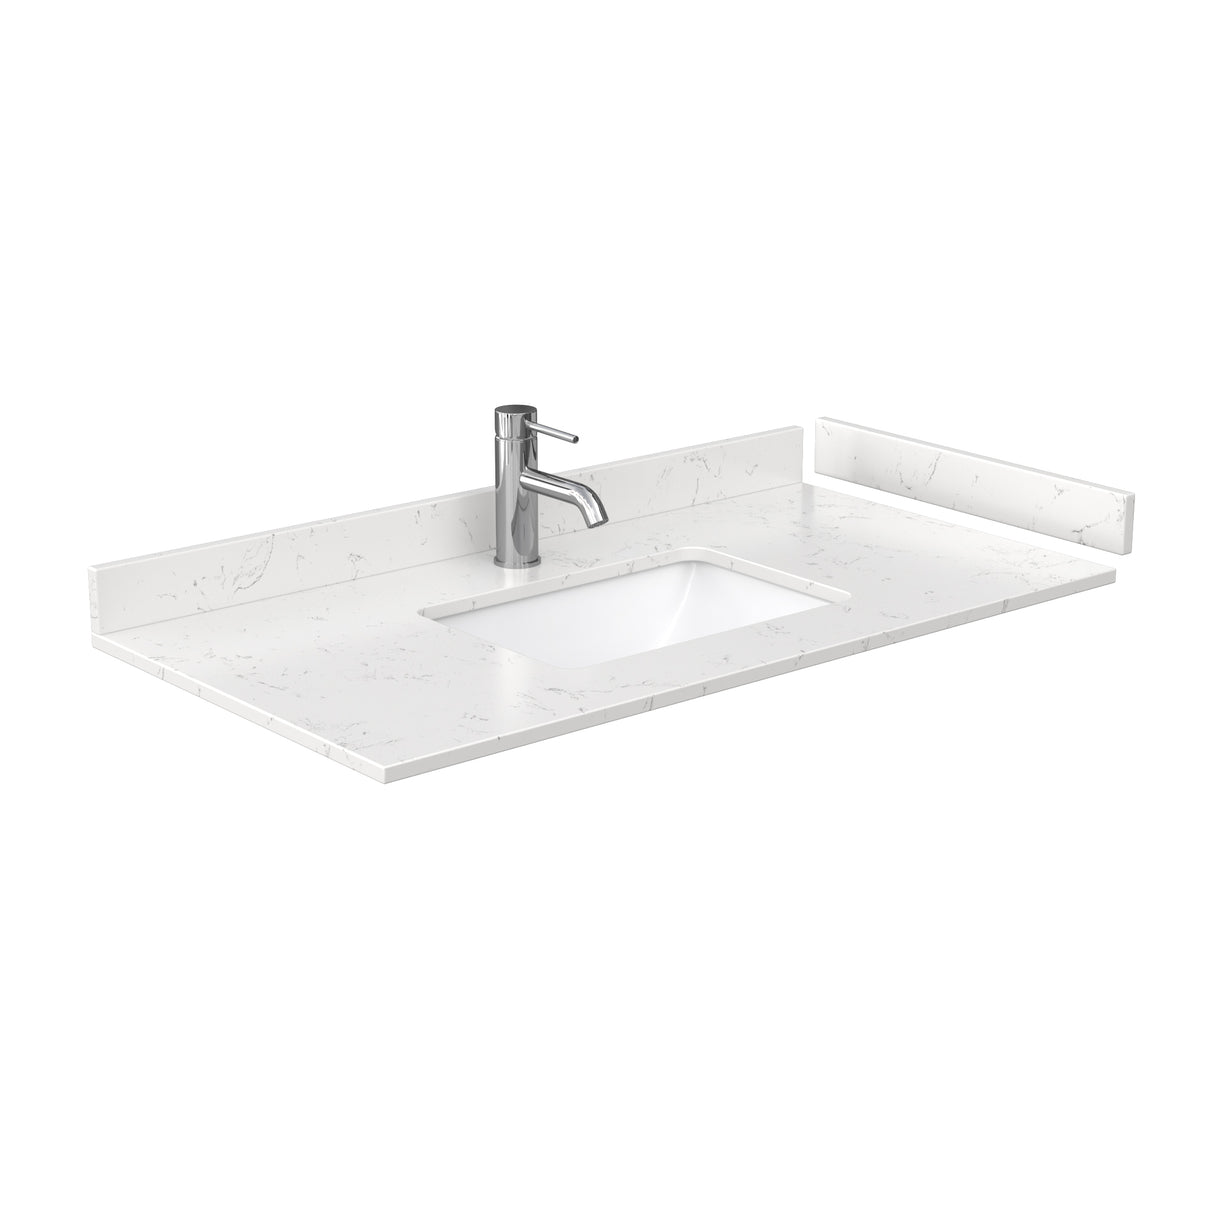 Beckett 42 Inch Single Bathroom Vanity in White Carrara Cultured Marble Countertop Undermount Square Sink No Mirror